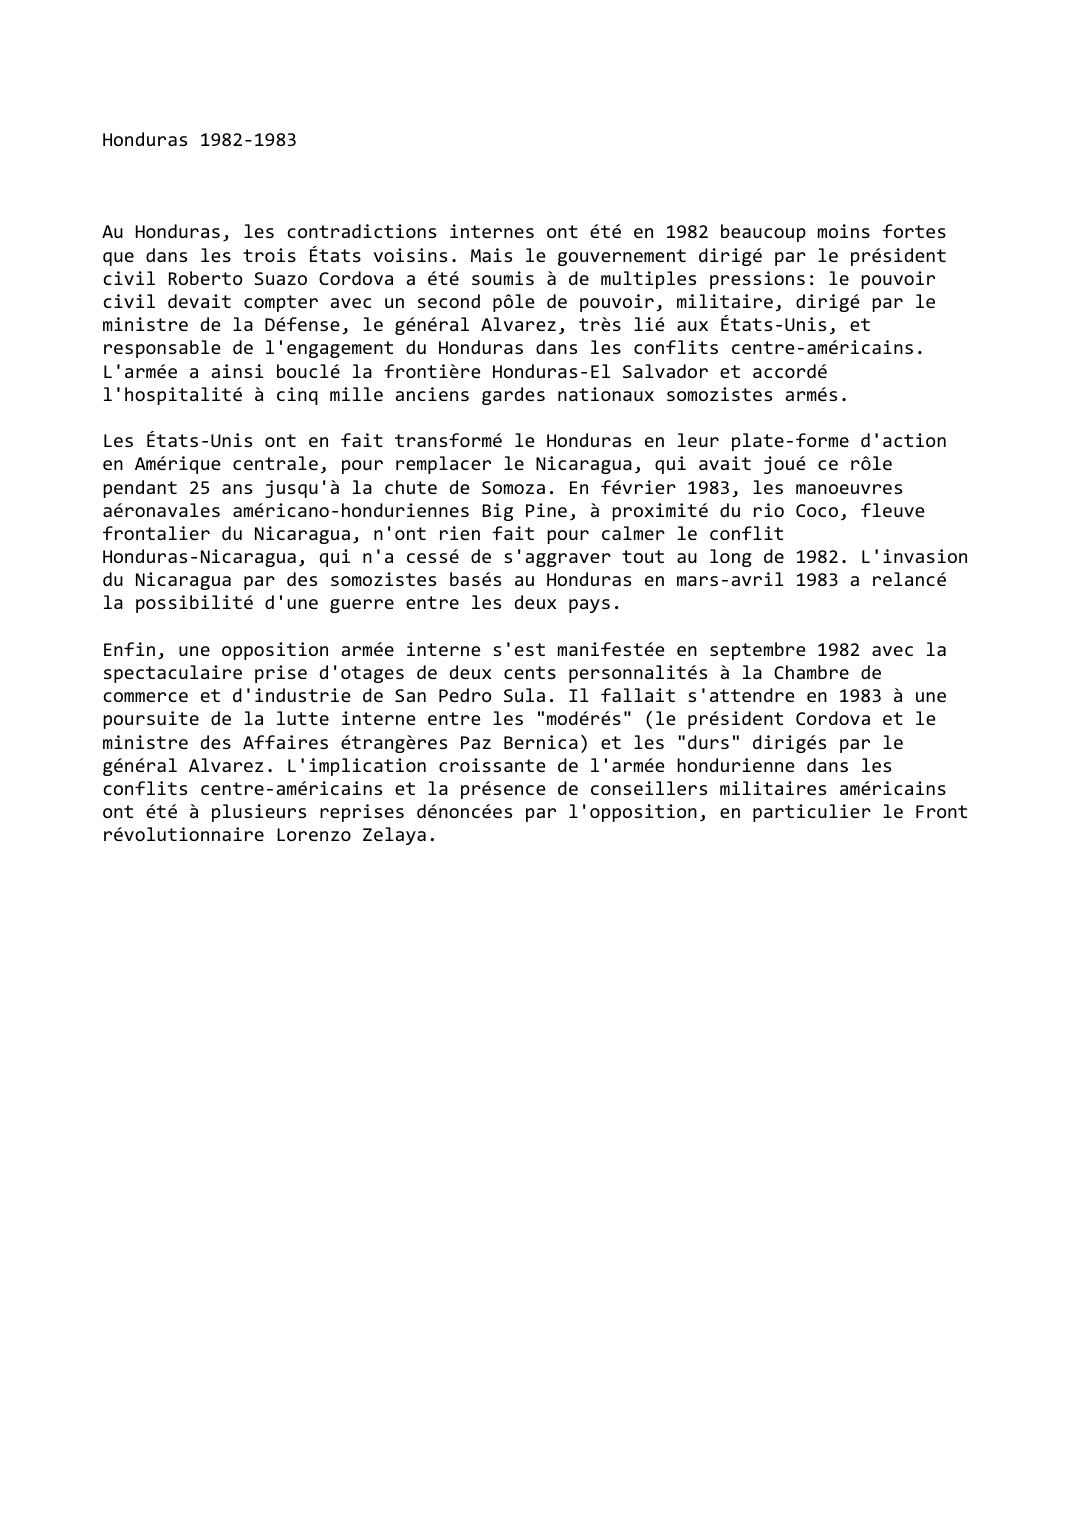 Prévisualisation du document Honduras (1982-1983)